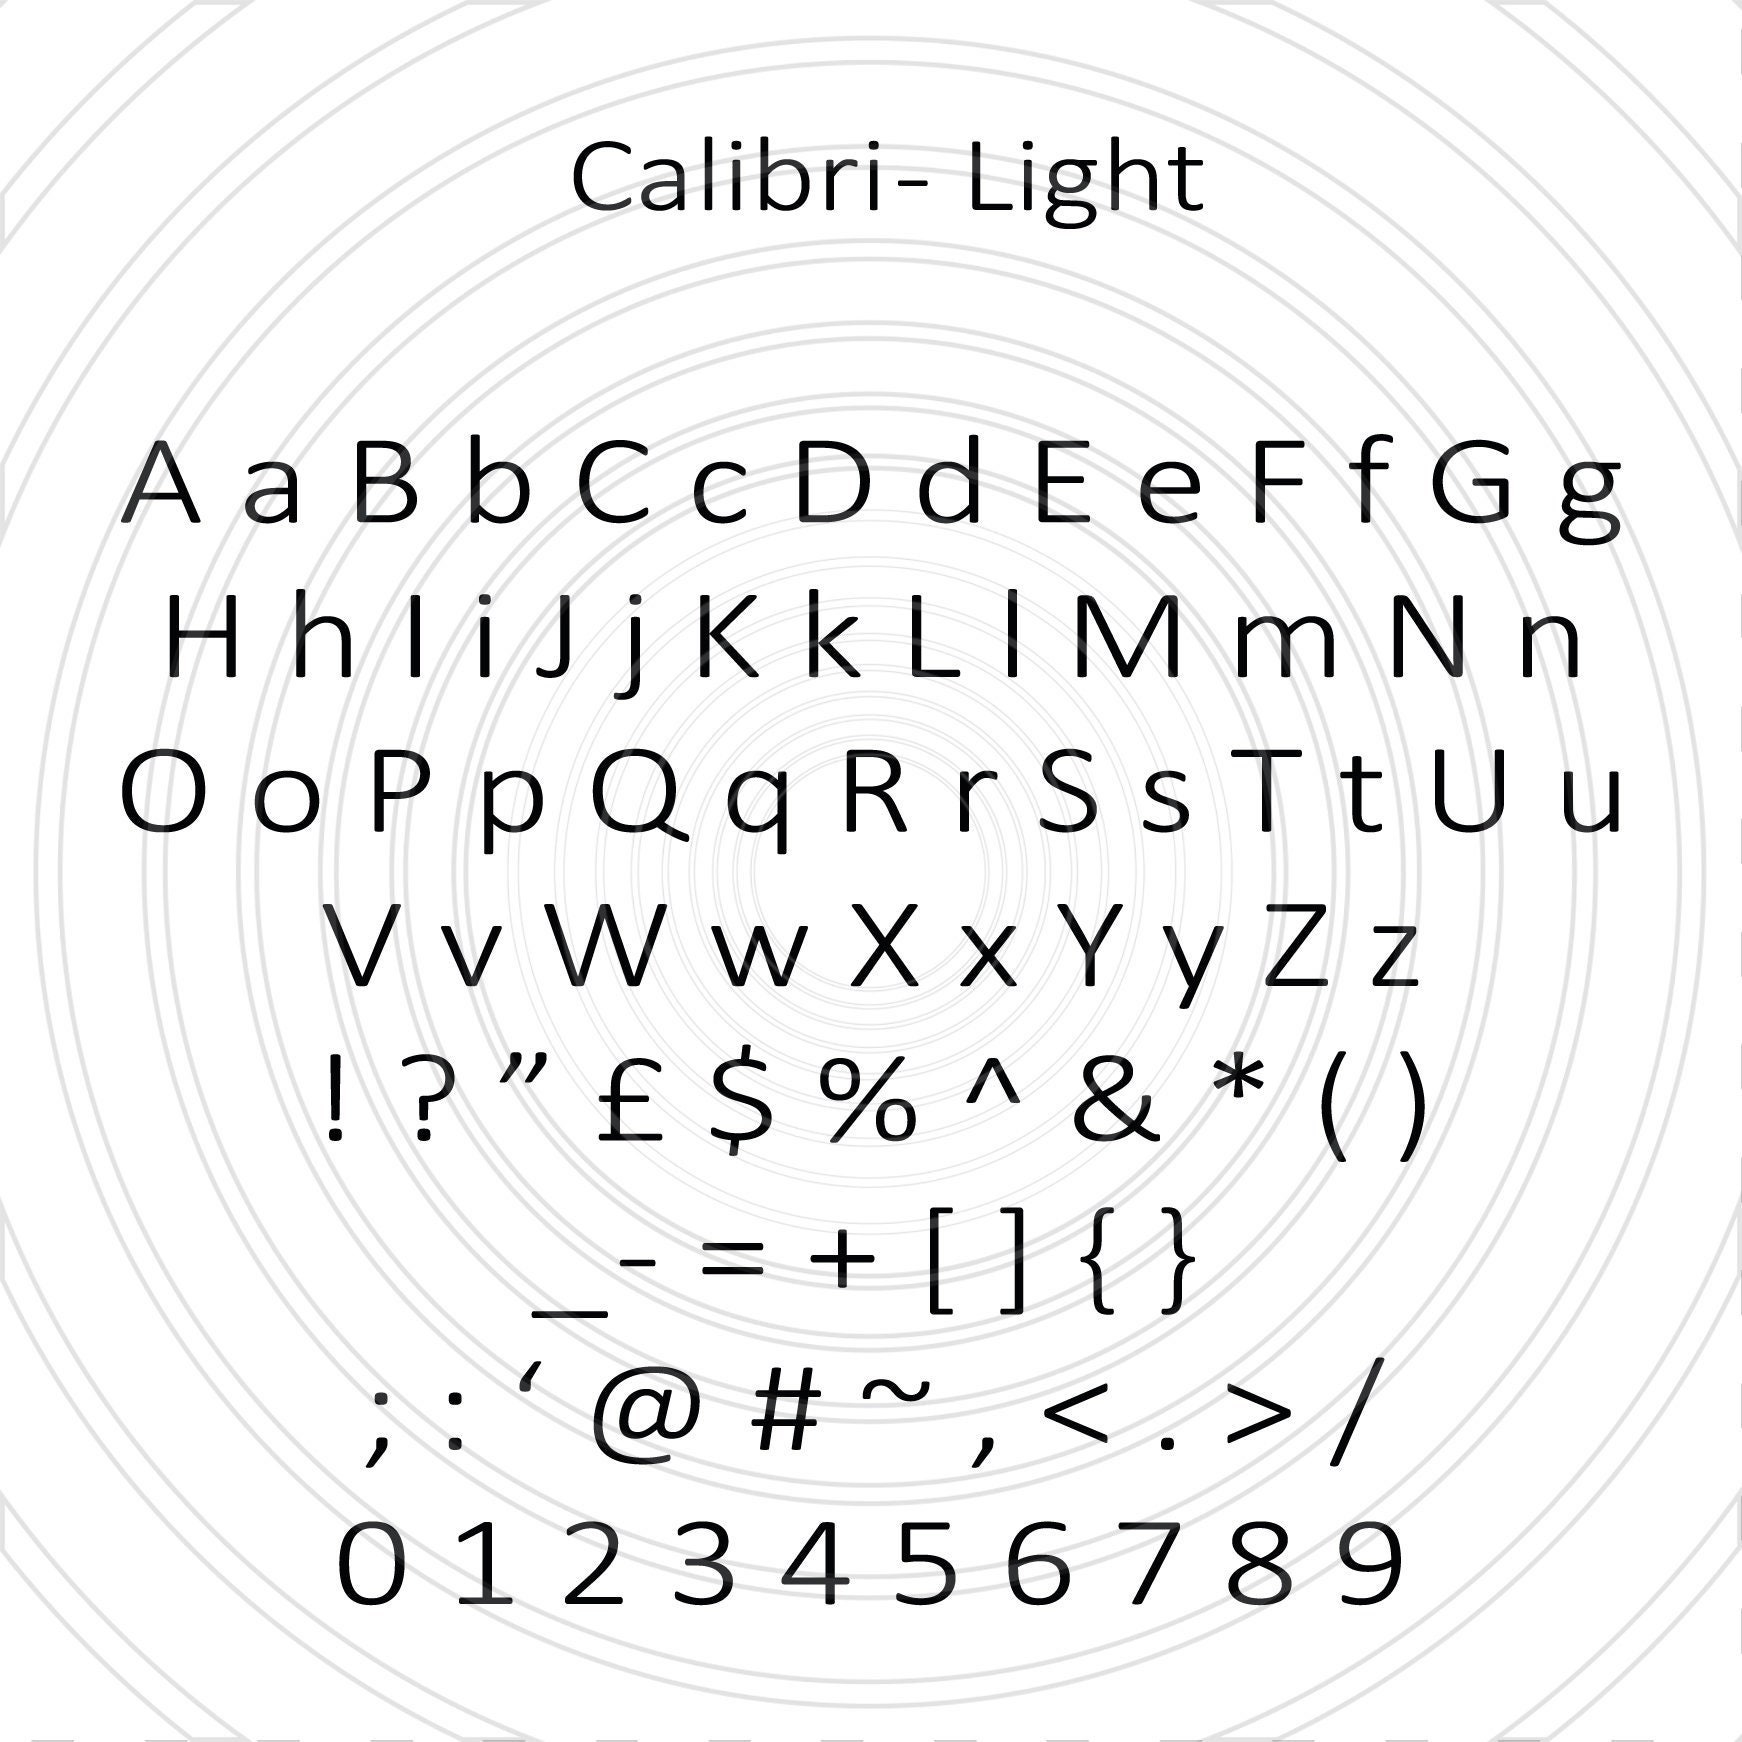 Calibri Light Modern Plain Futuristic Installable - Etsy